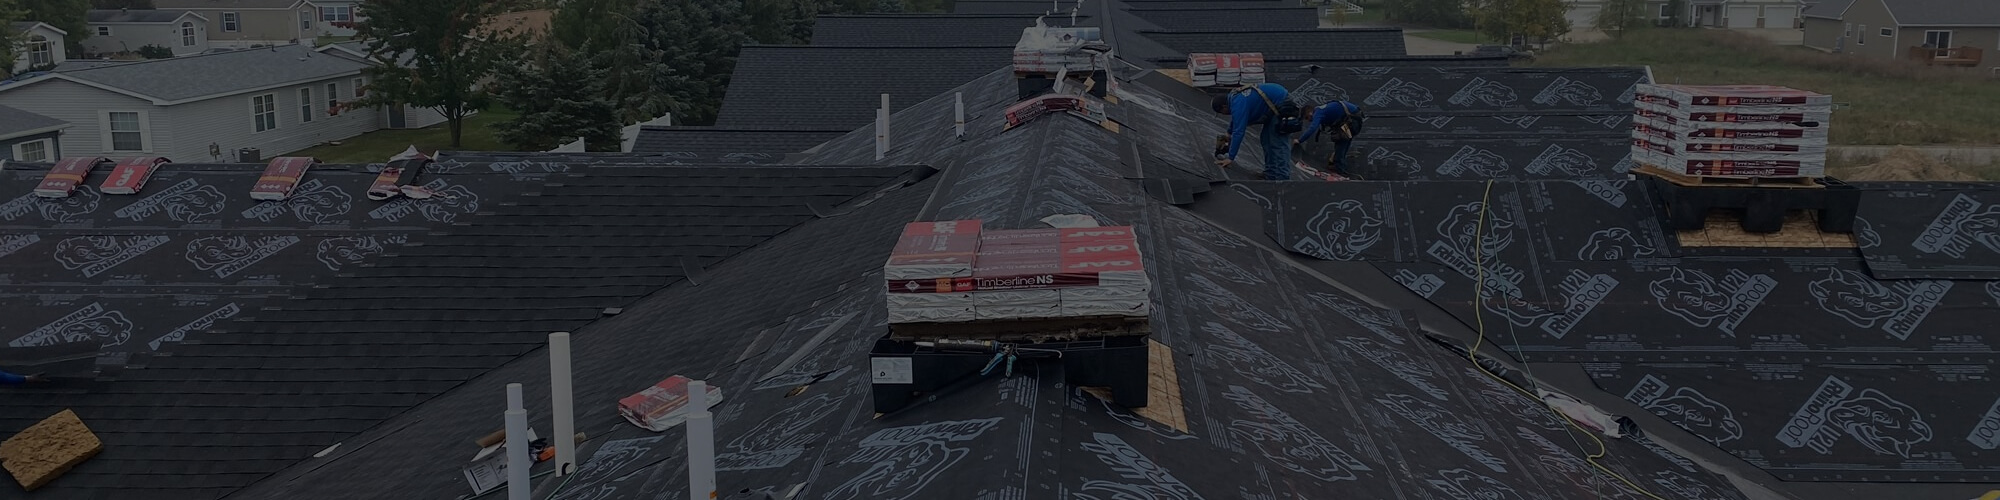 Commercial Roofing Contractors in Grand Rapids